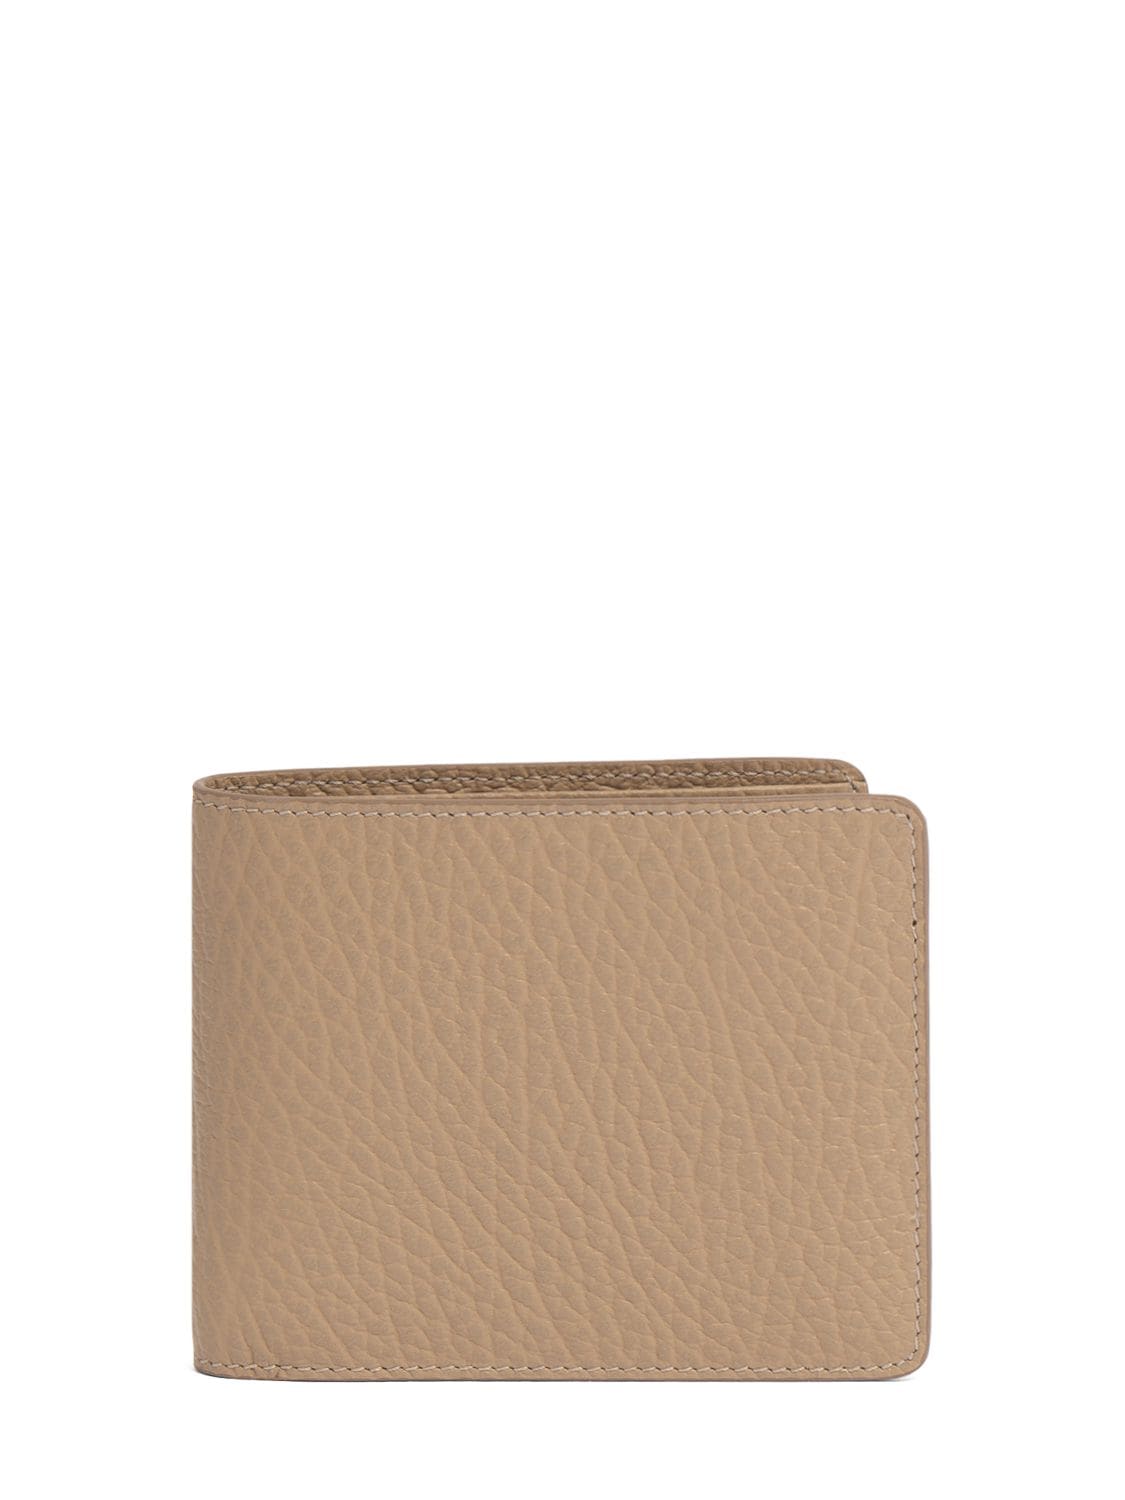 Maison Margiela Grained Leather Slim Wallet In Biche